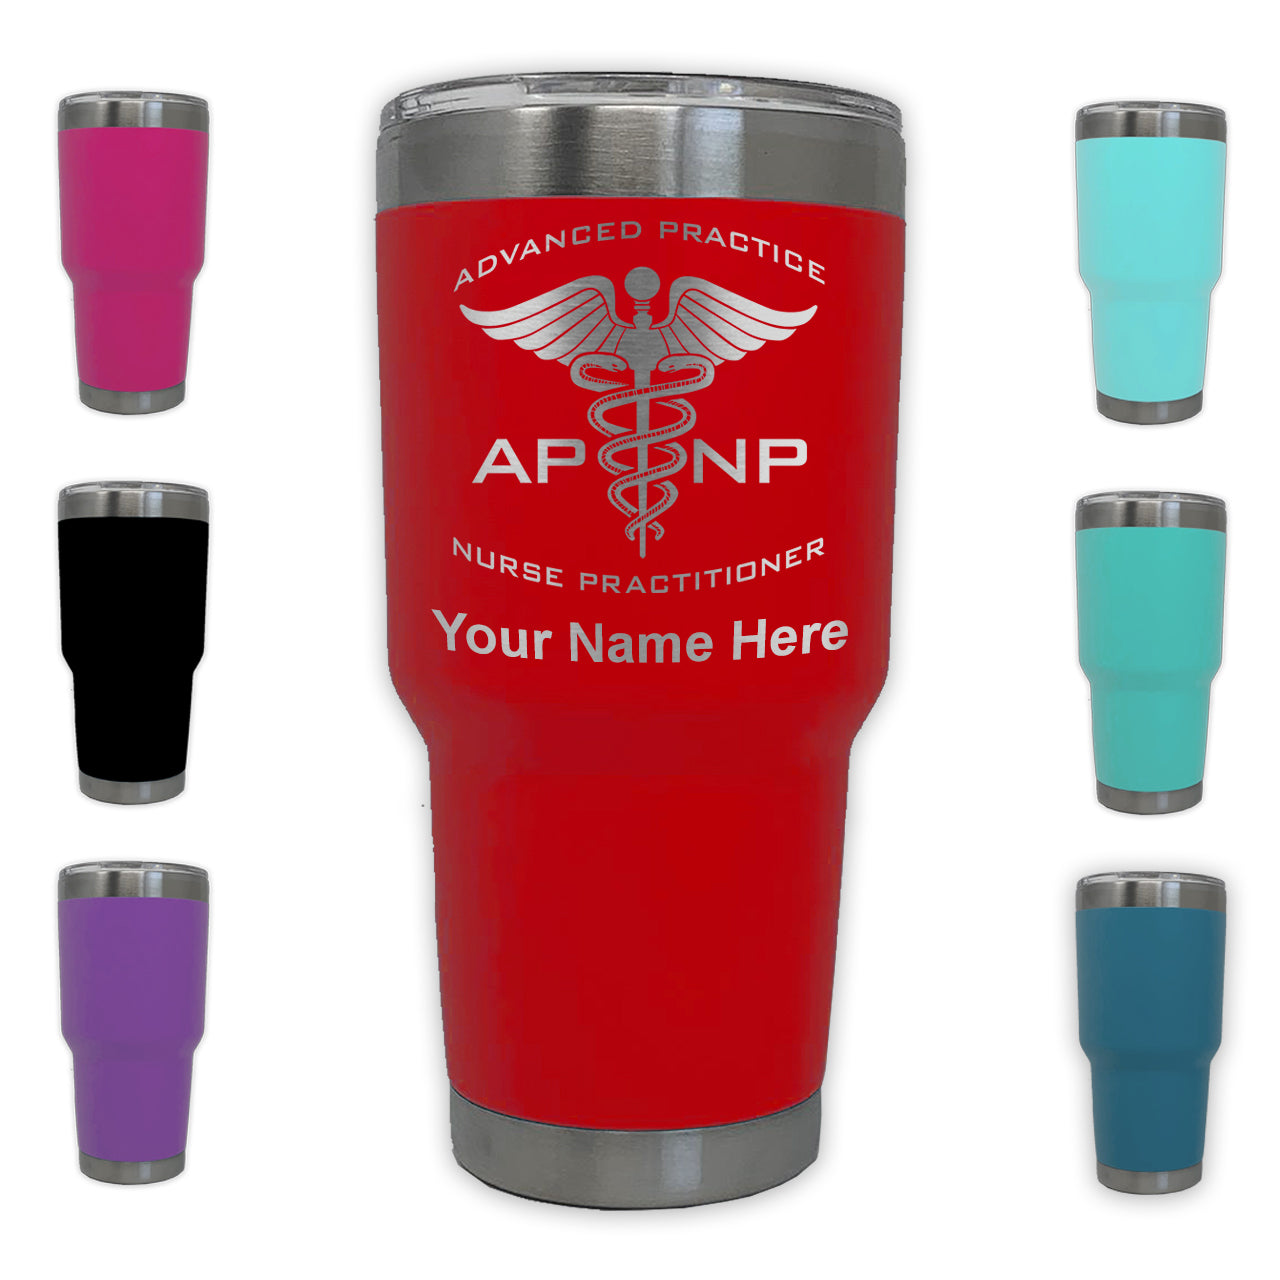 LaserGram 30oz Tumbler Mug, APNP Advanced Practice Nurse Practitioner, Personalized Engraving Included